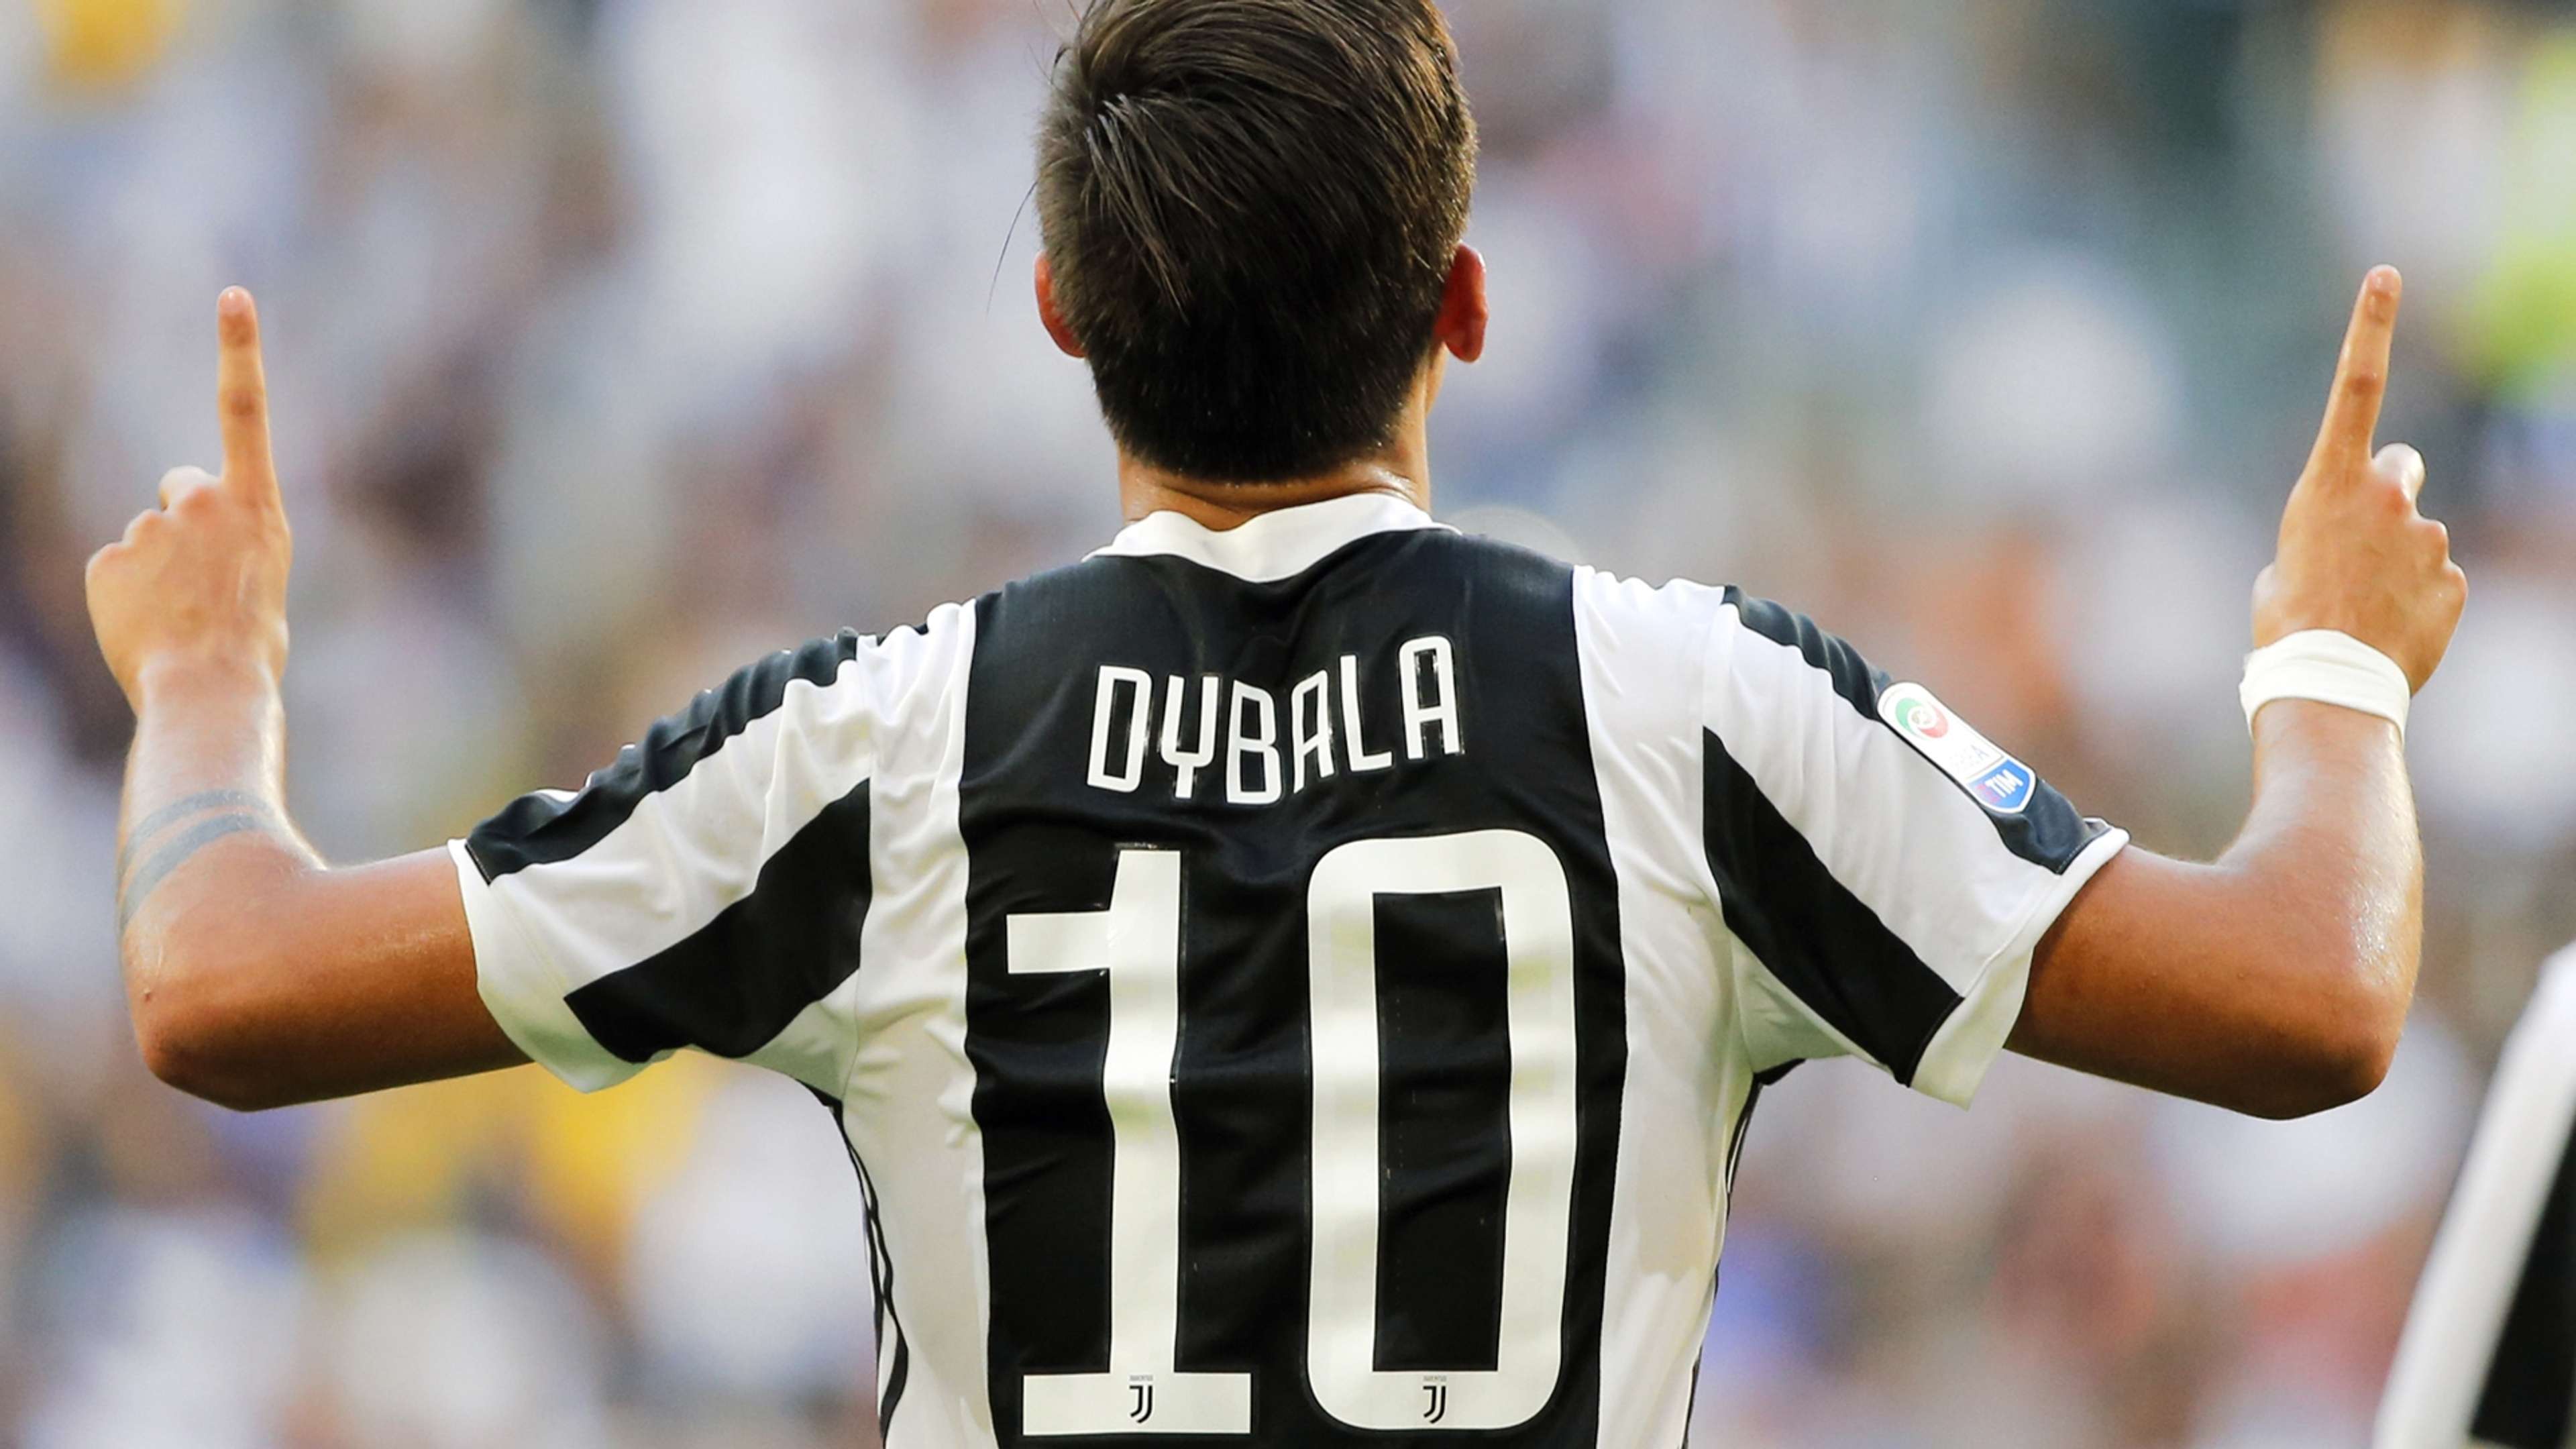 Dybala story Juventus